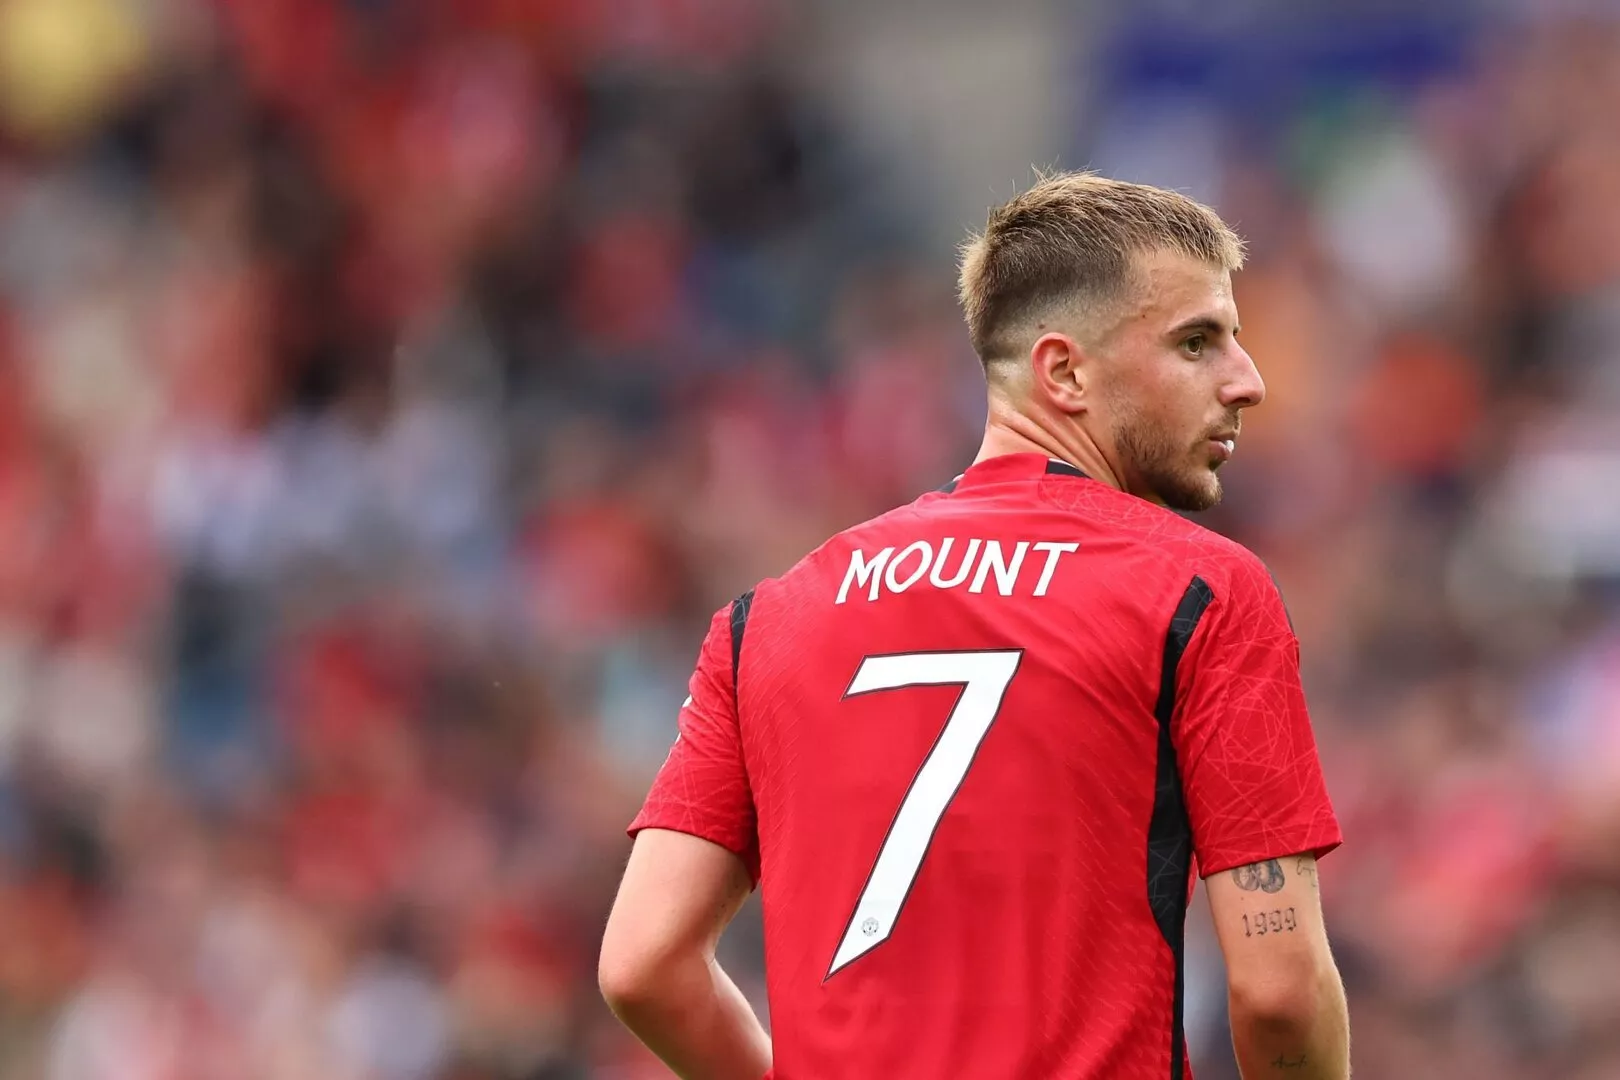 Donny van de Beek's Man Utd shirt number revealed